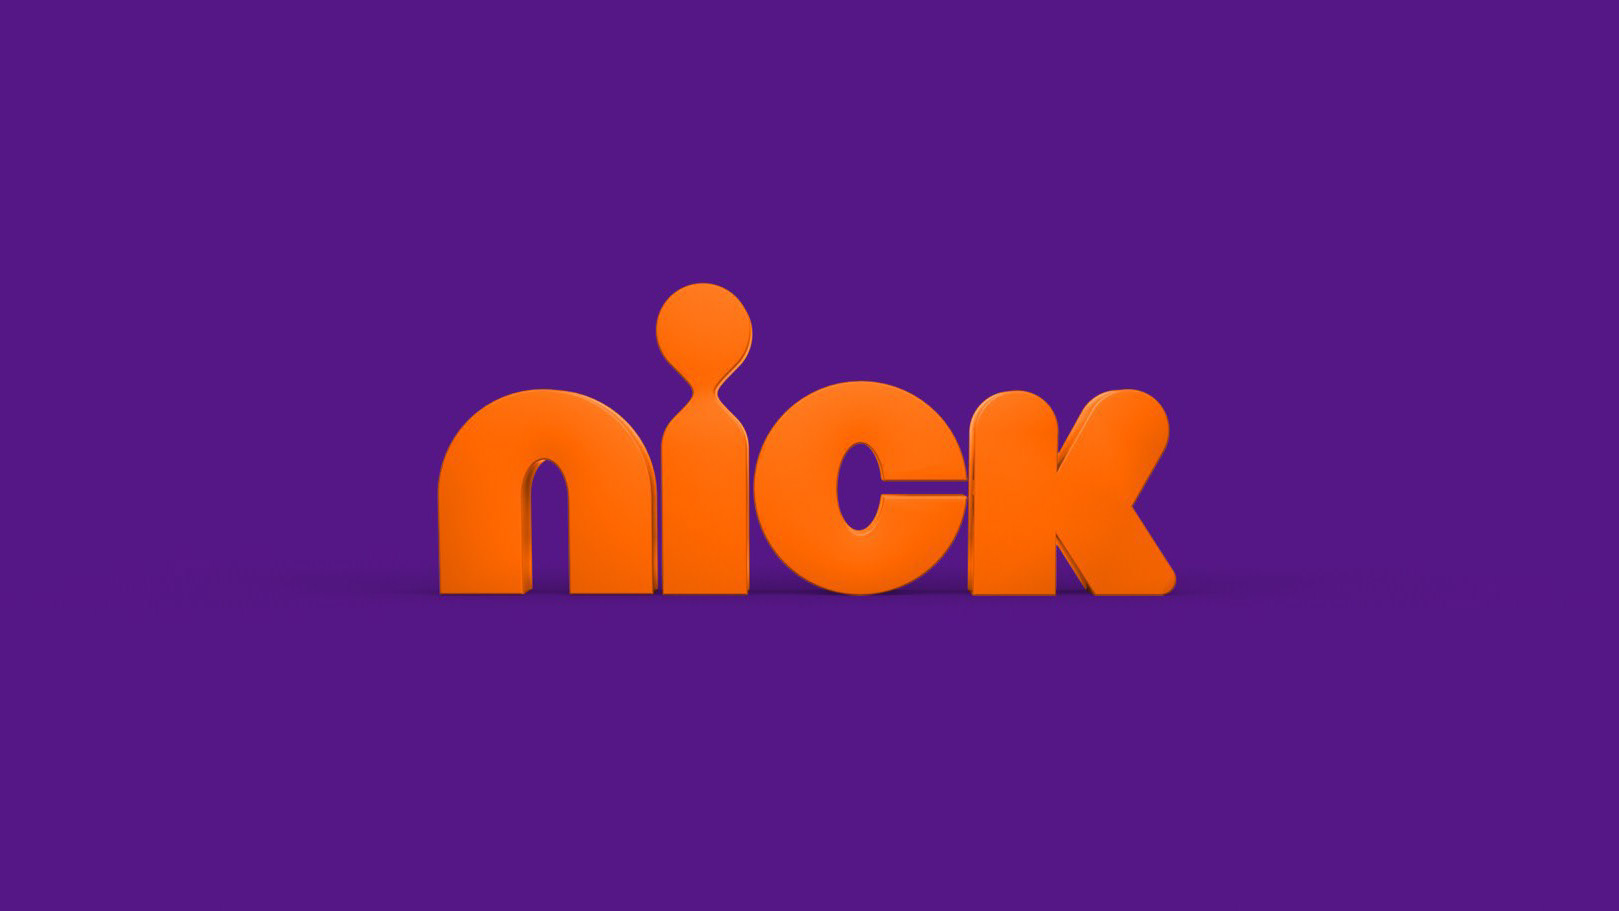 Nick jr россия. Никелодеон. Канал Nickelodeon. Телеканал Никелодеон. Никелодеон логотип.